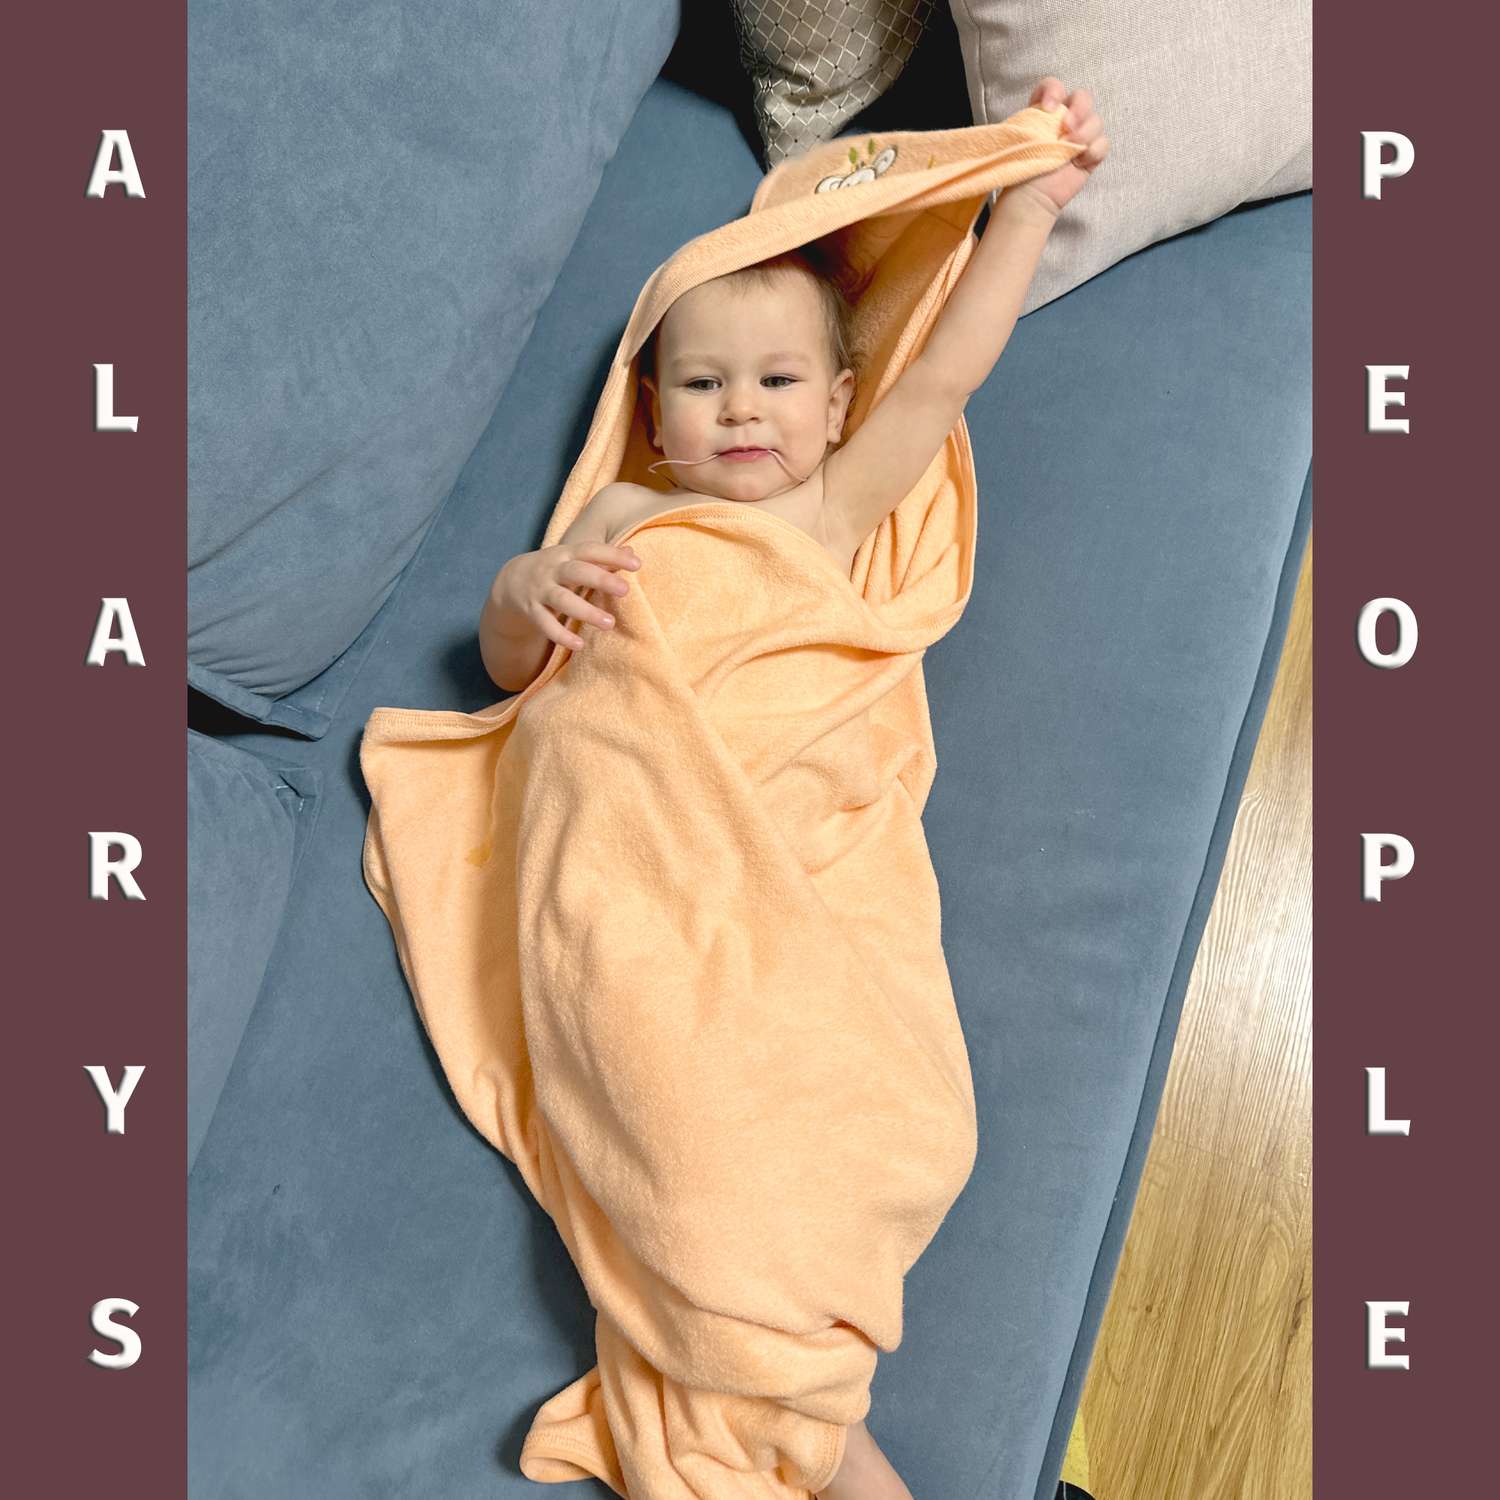 Набор для купания ALARYSPEOPLE пеленка-полотенце с уголком и рукавичка - фото 9